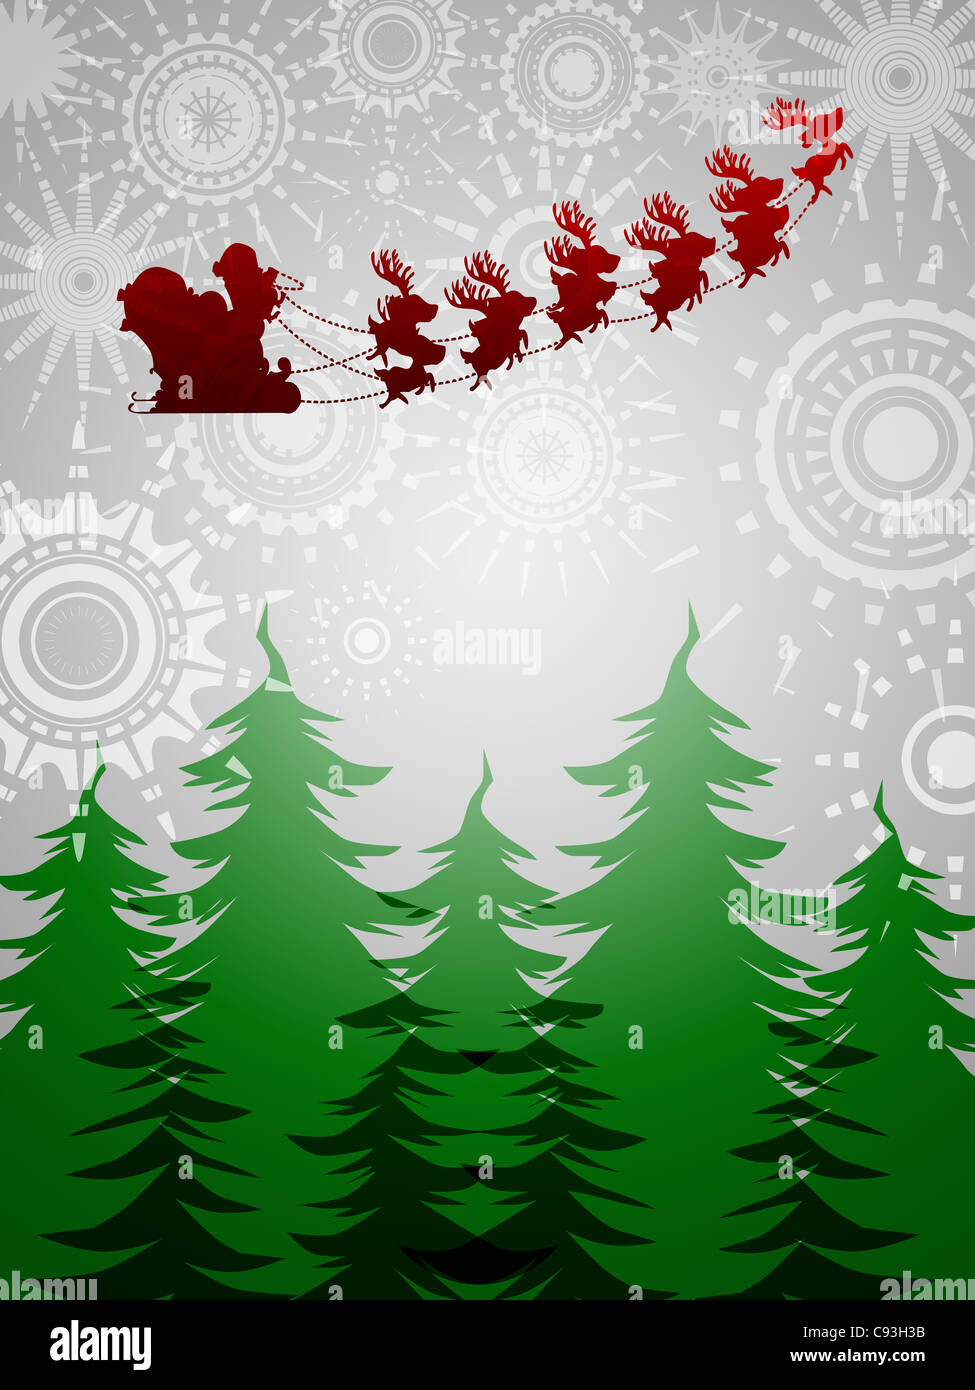 Santa Sleigh Reindeer Flying Over Trees on Silver Sun Star Background Illustration Stock Photo